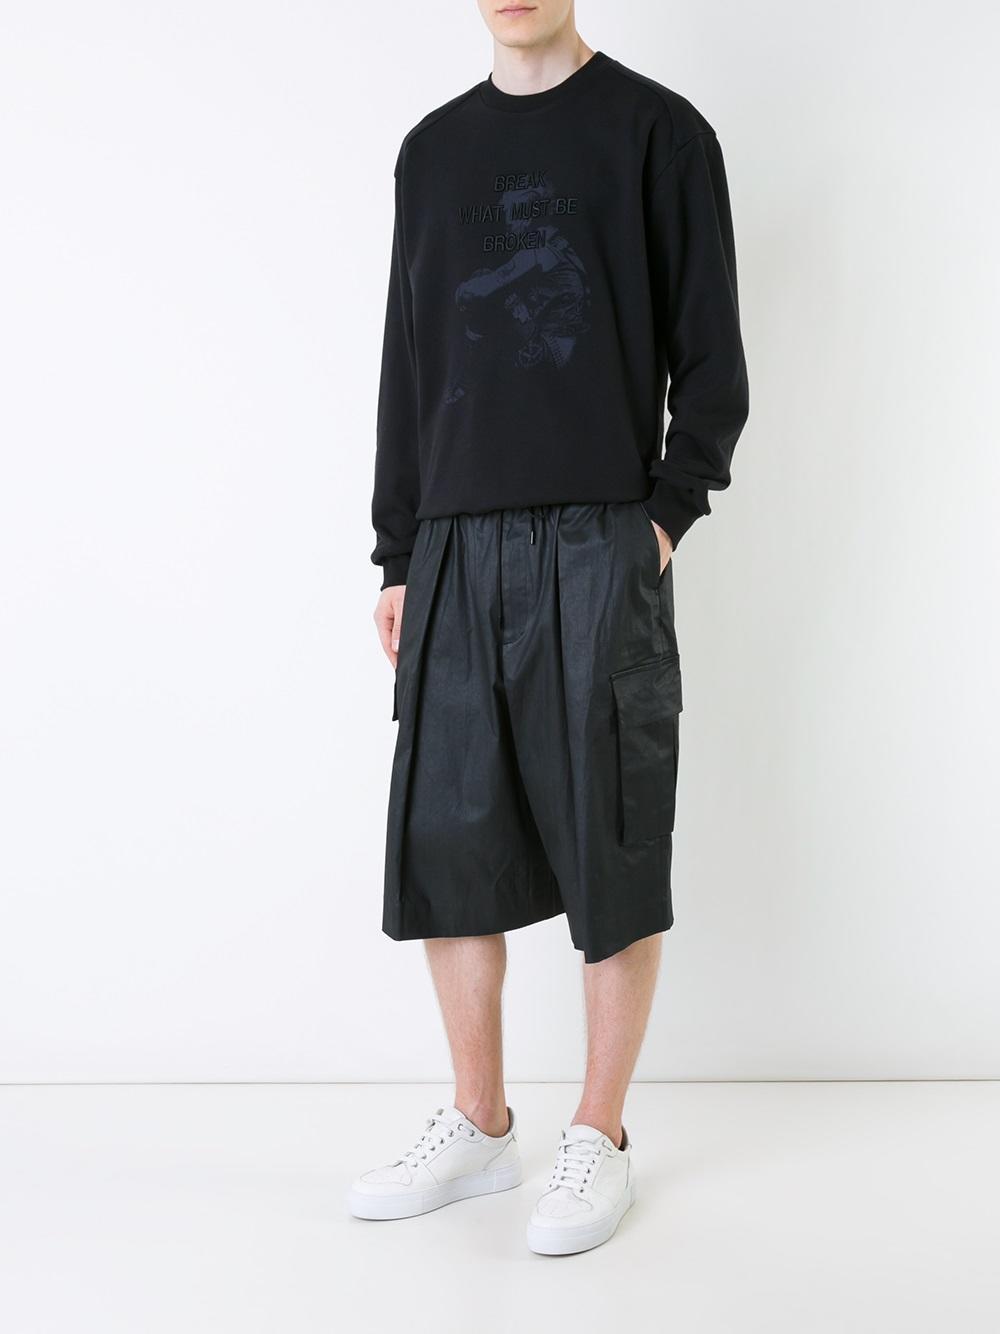 Lyst - Juun.J Embroidered Sweatshirt in Black for Men